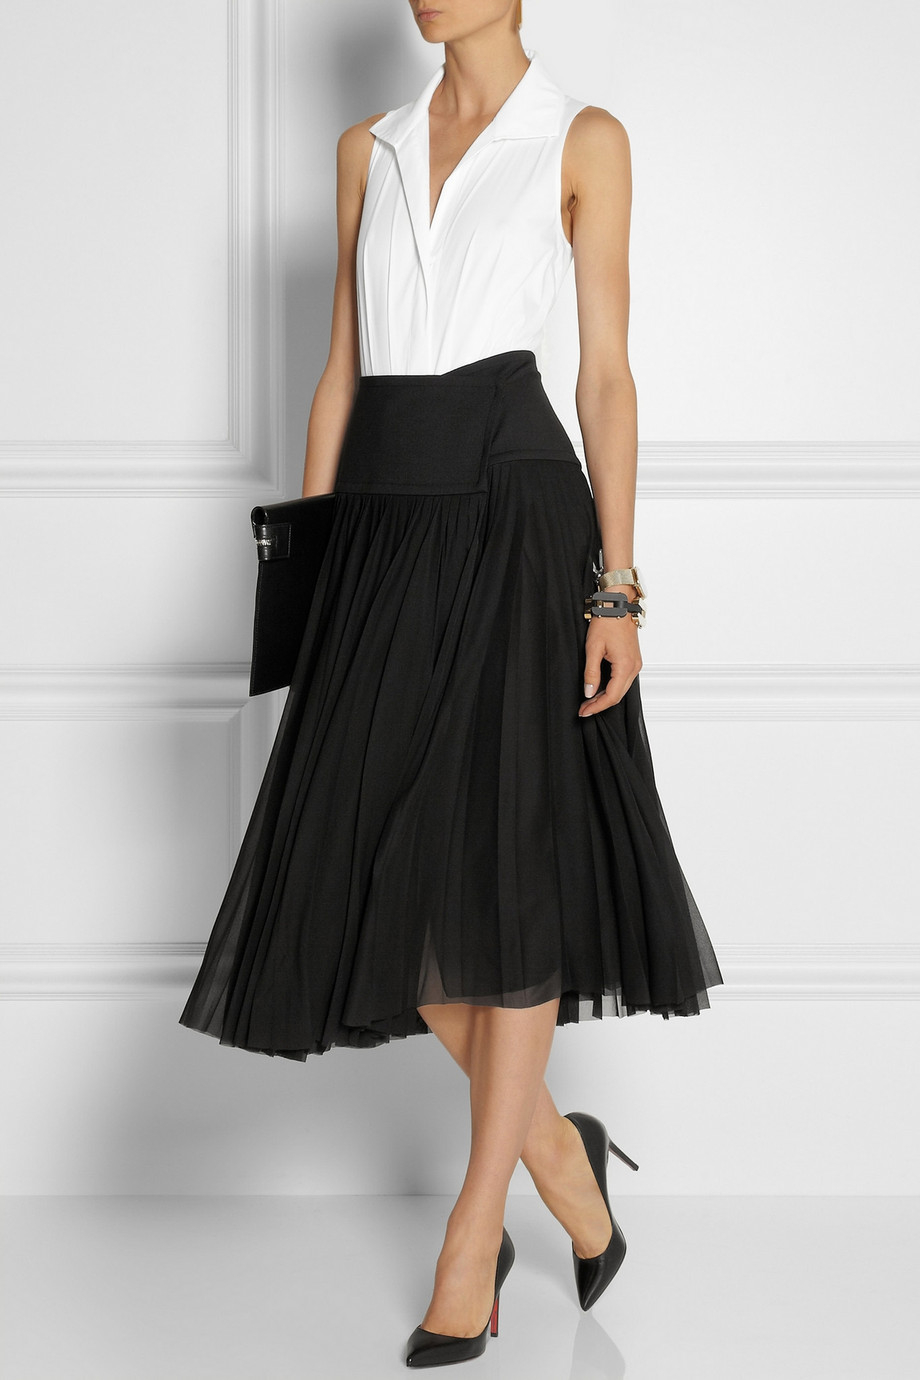 Donna karan Pleated Stretch-Silk Georgette Wrap Skirt in Black | Lyst